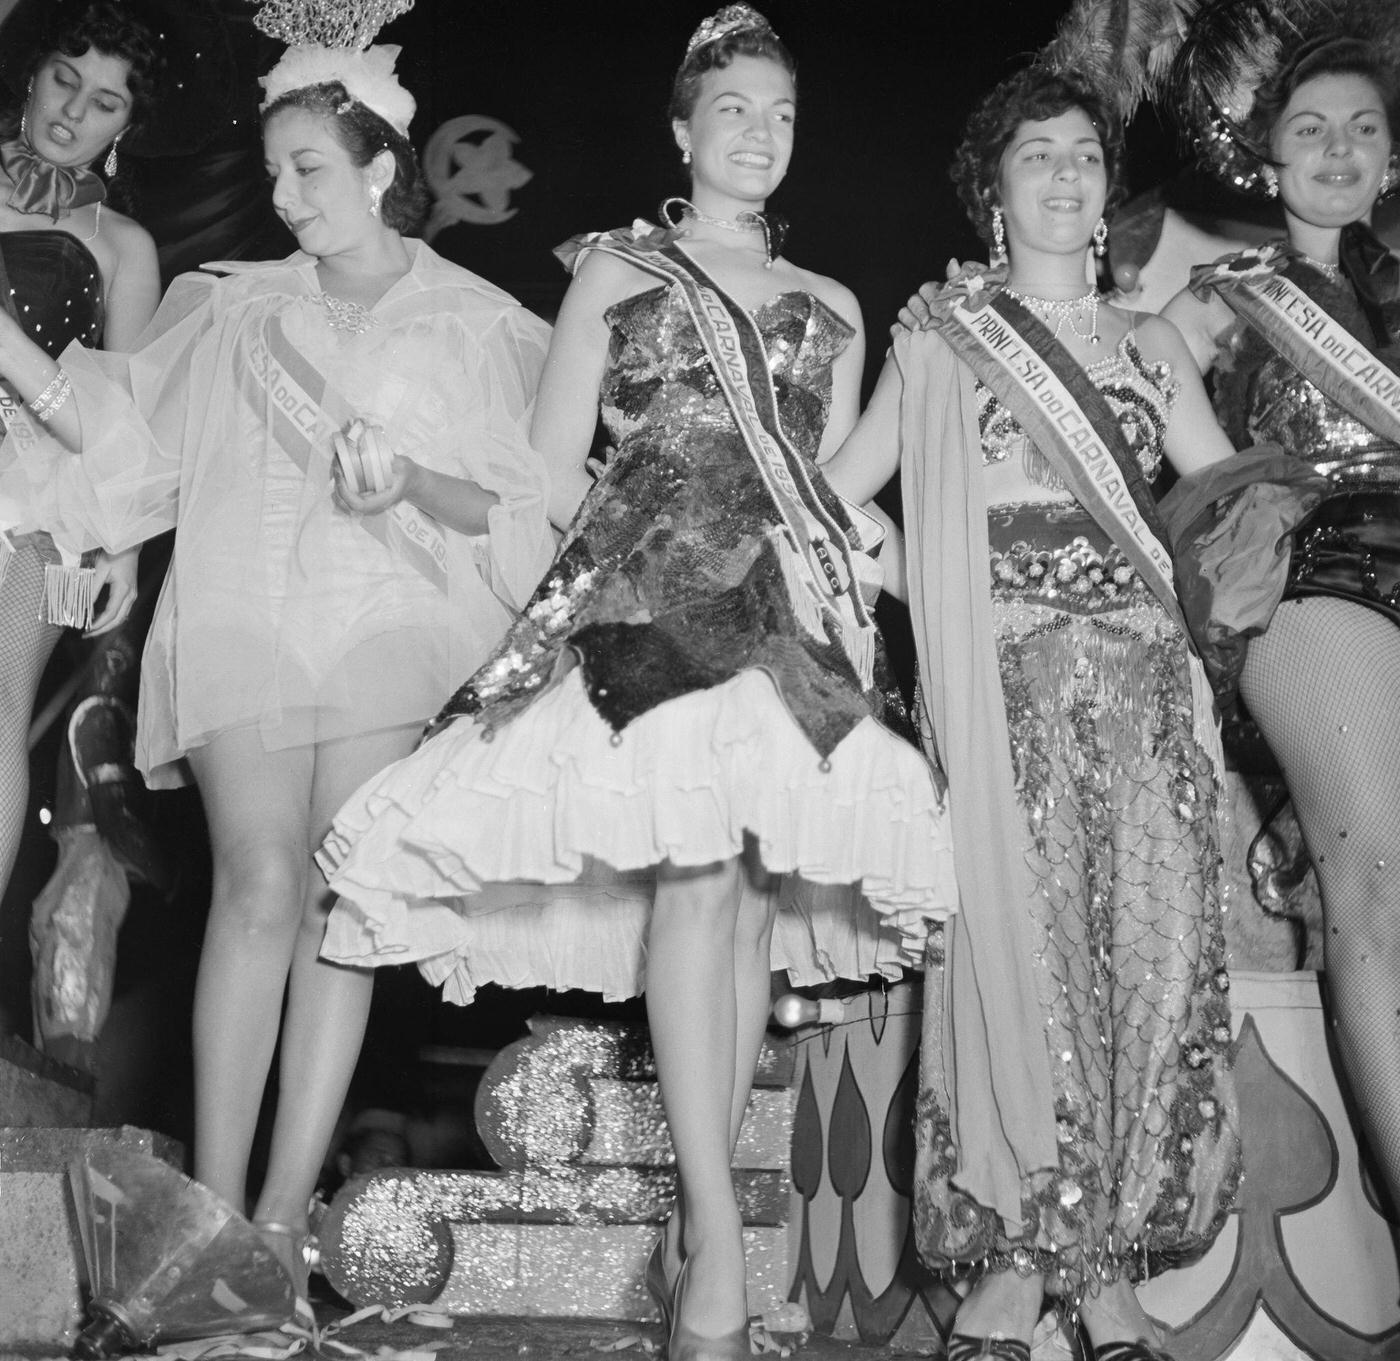 Parade Float Revelers, Rio Carnival 1953